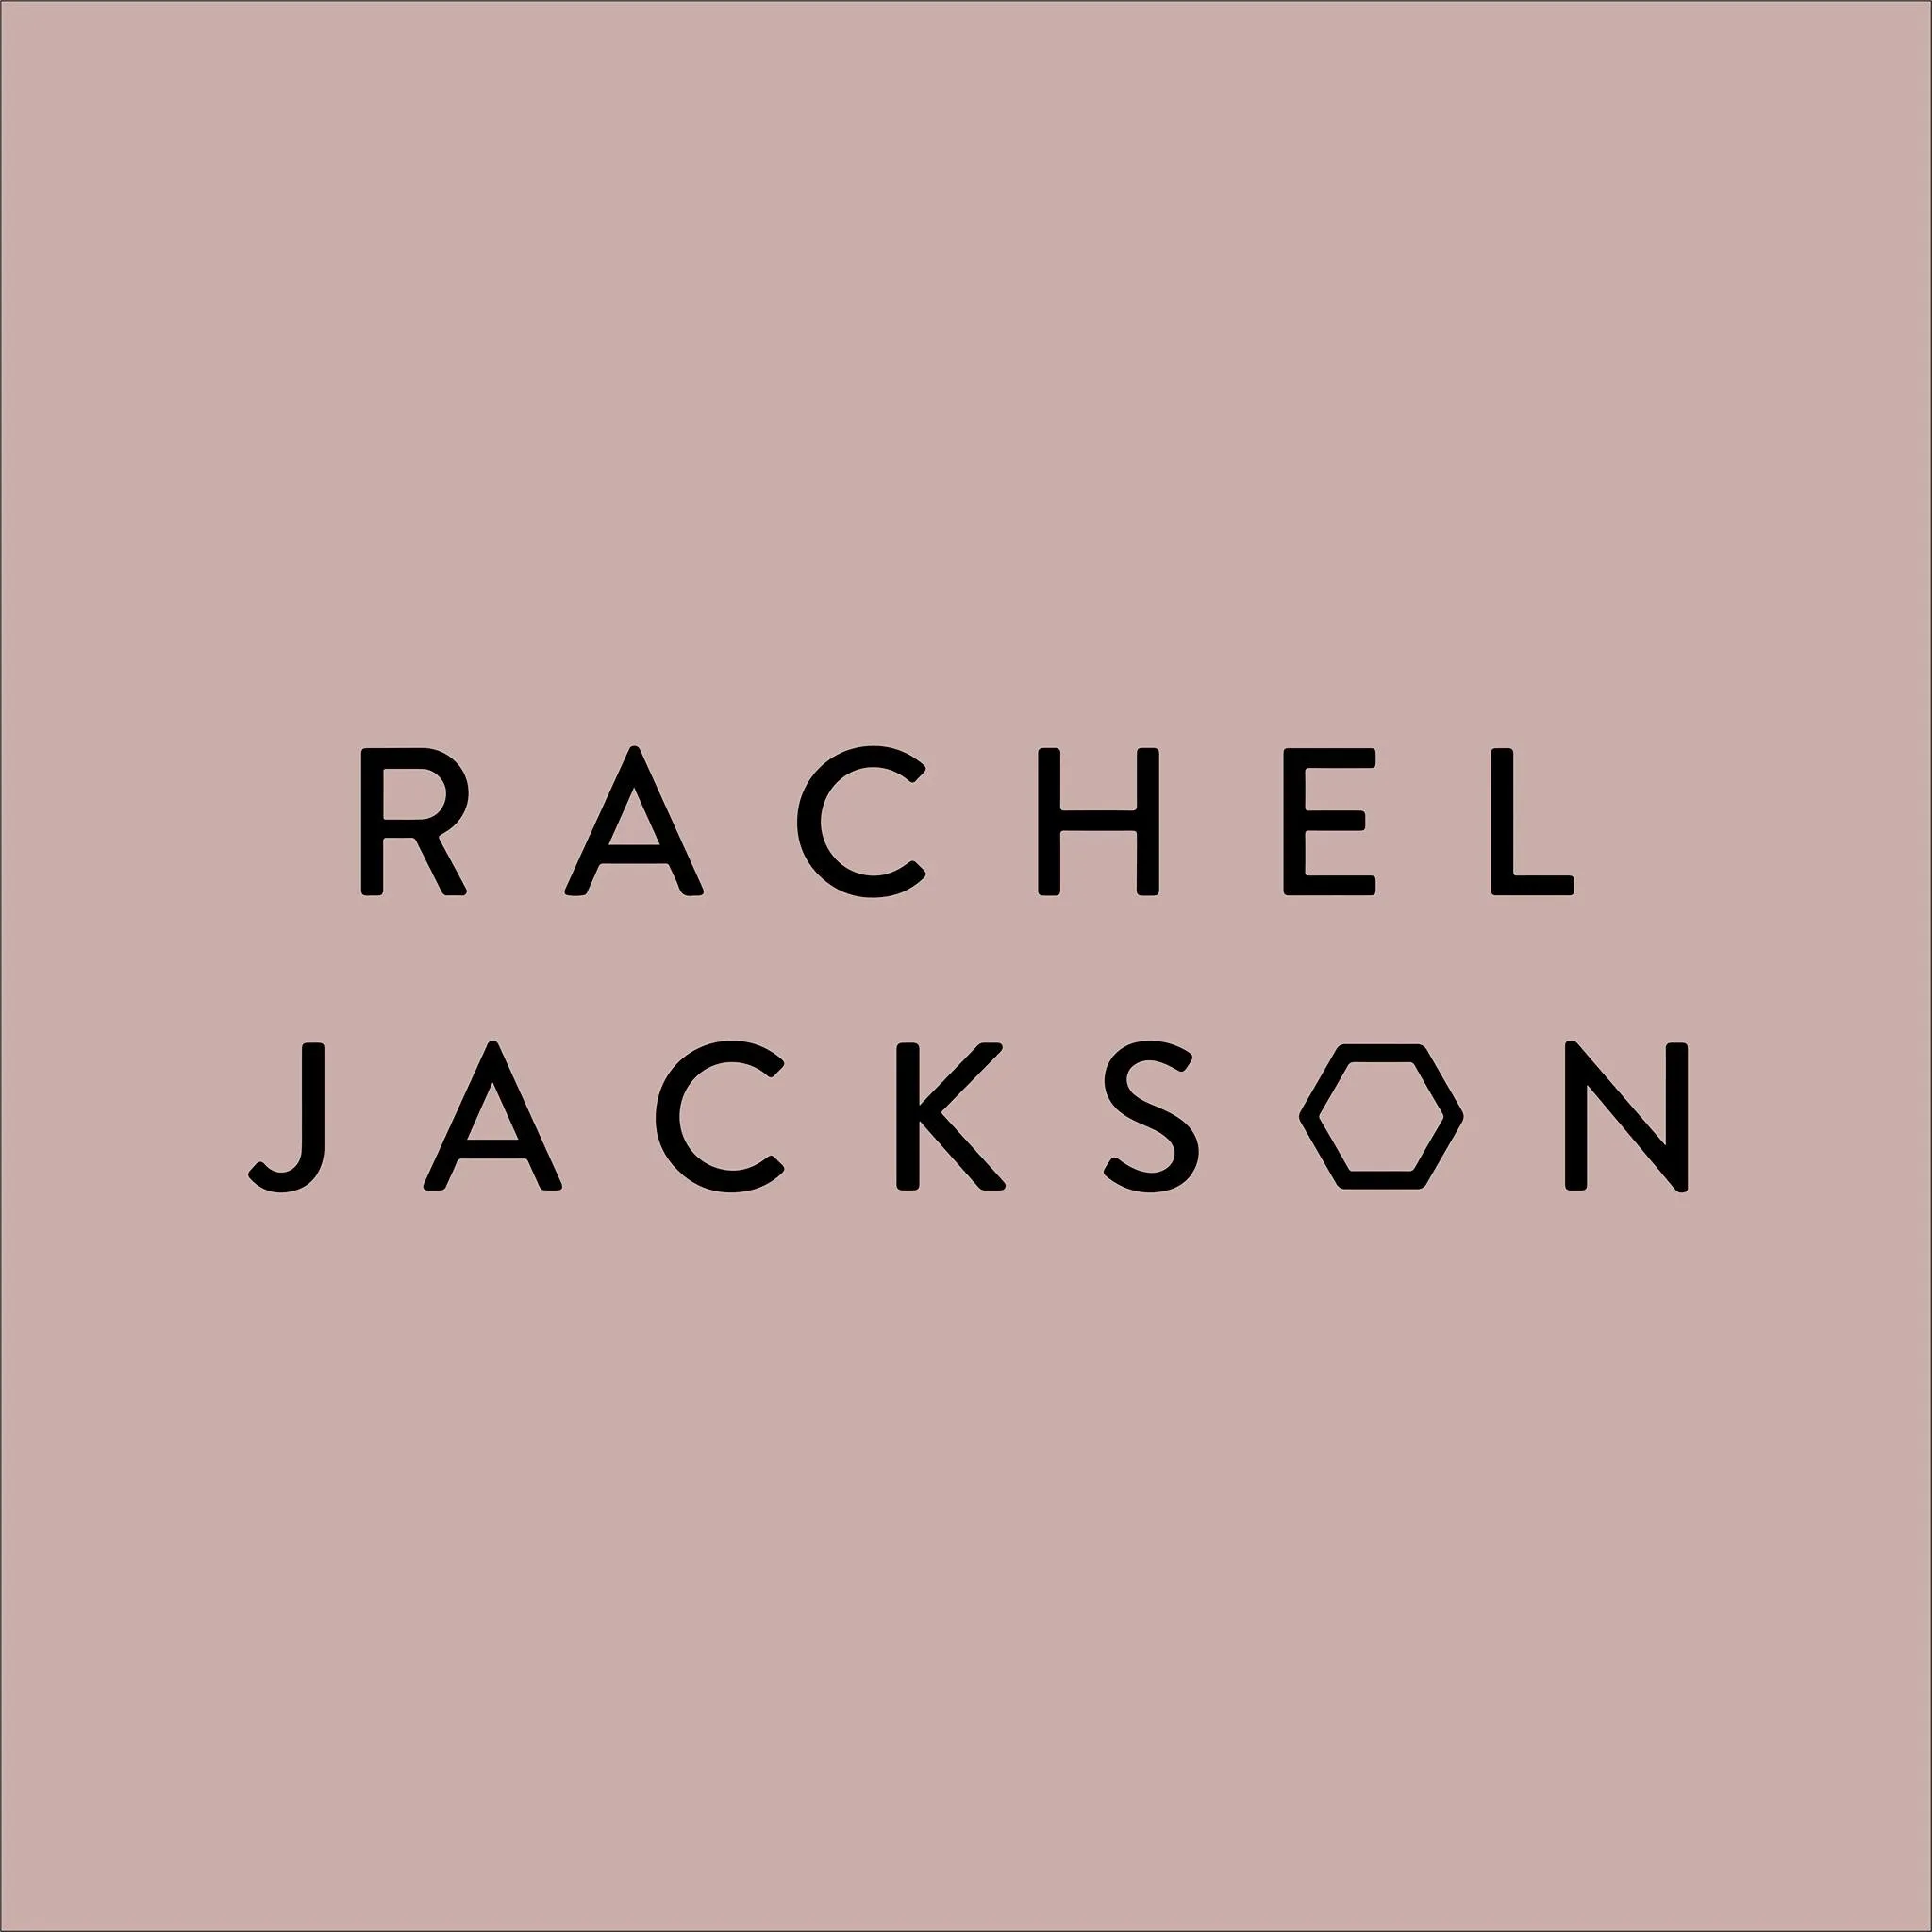 Rachel Jackson Voucher Codes & Discount Codes